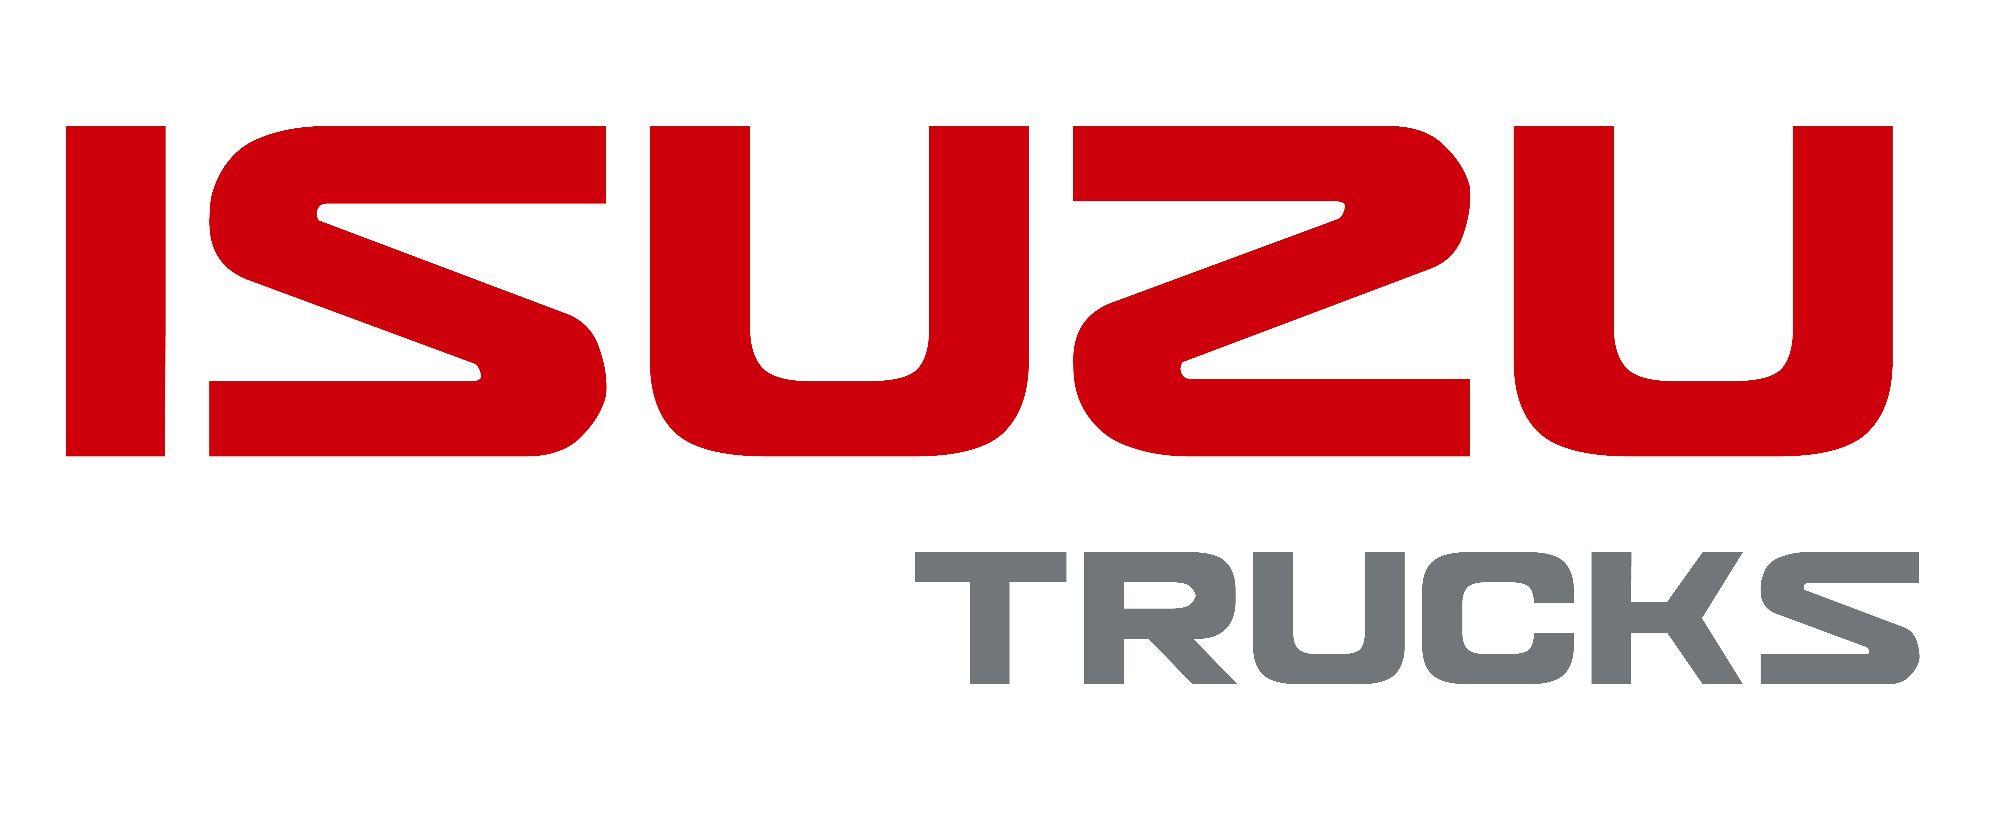 Isuzu Logo - Isuzu Logo Meaning and History. Symbol Isuzu | World Cars Brands